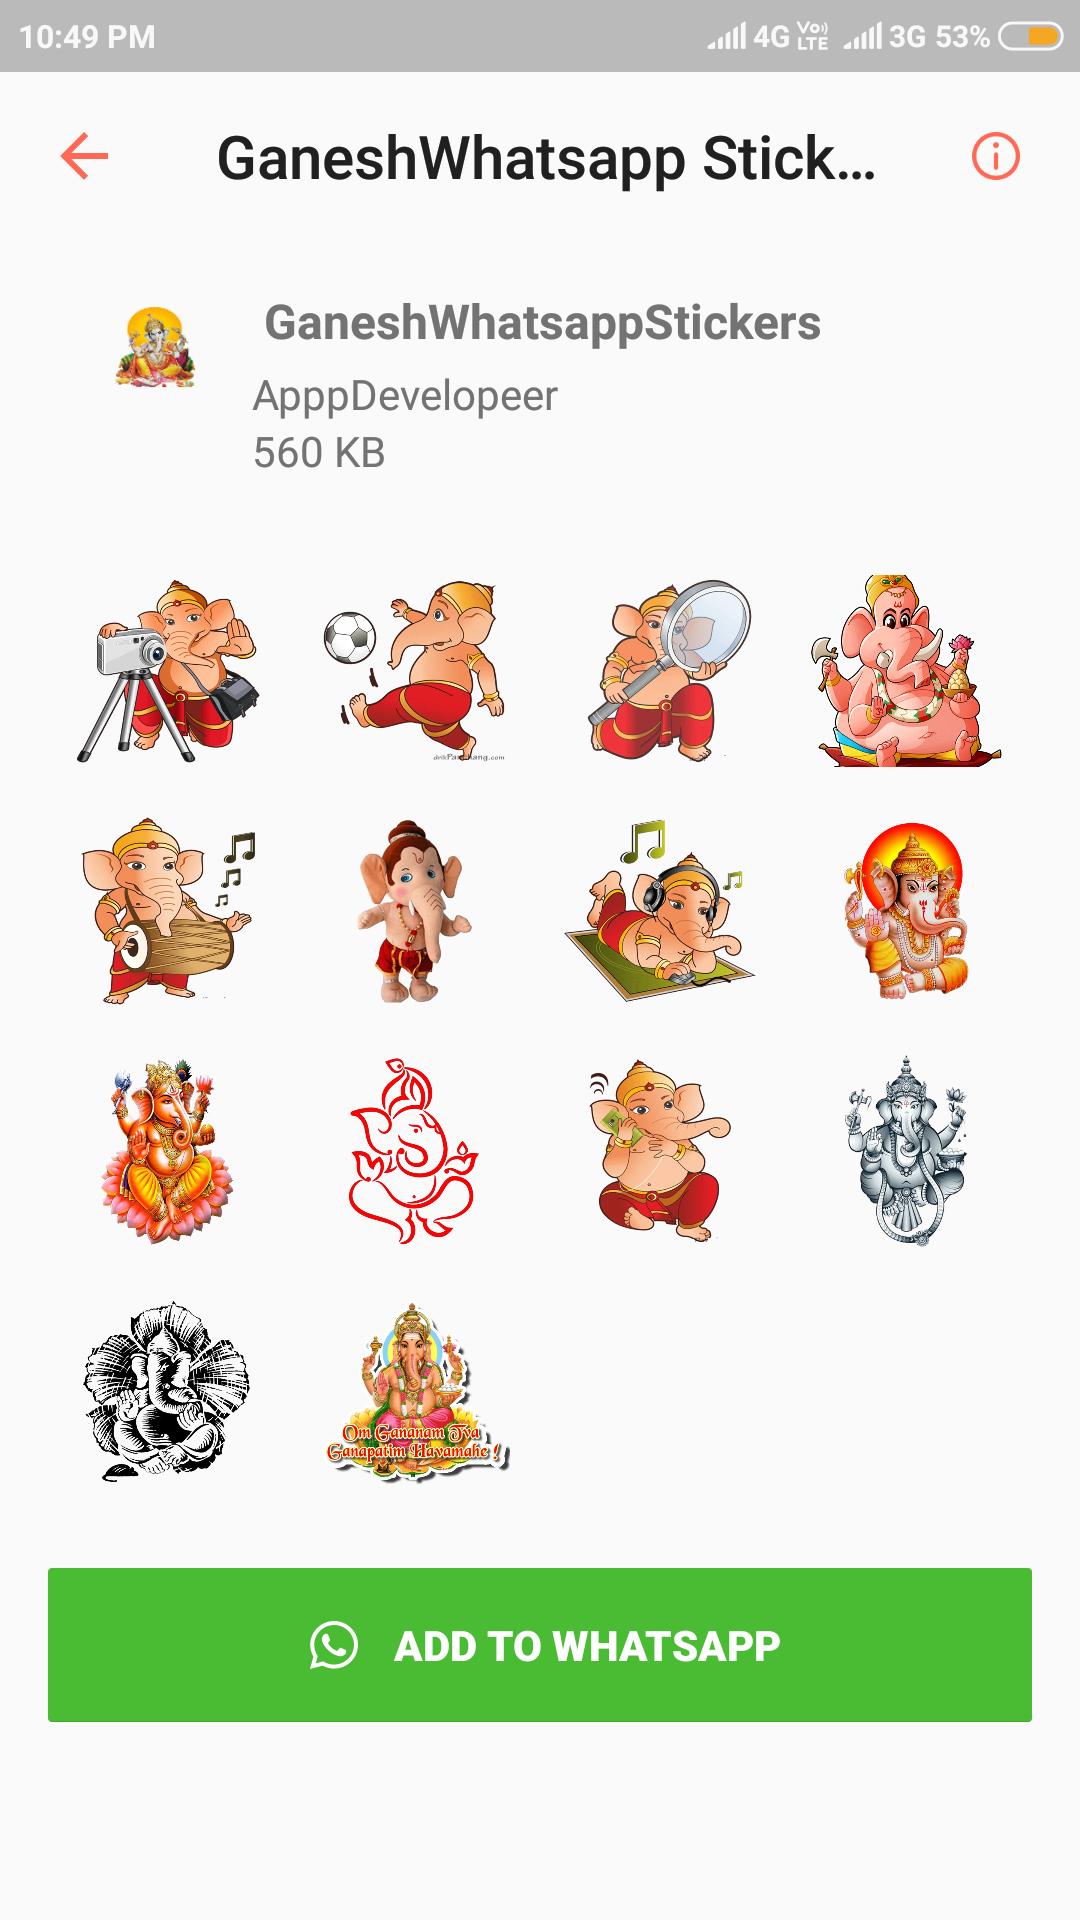 Ganesh Whatsapp Sticker App